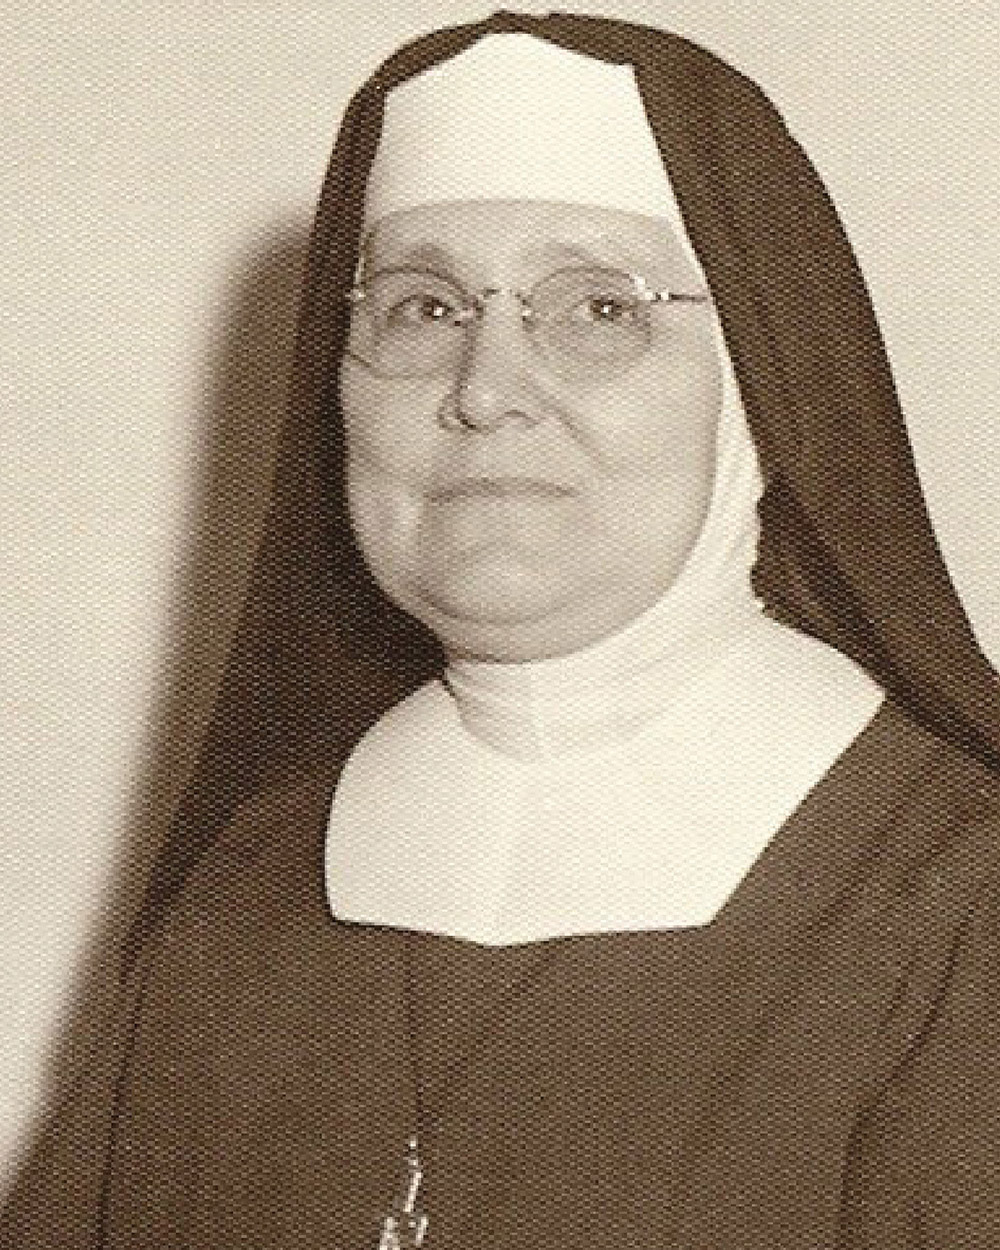 Sister-M.-Loretto-Stalock-OSF-1903-1990